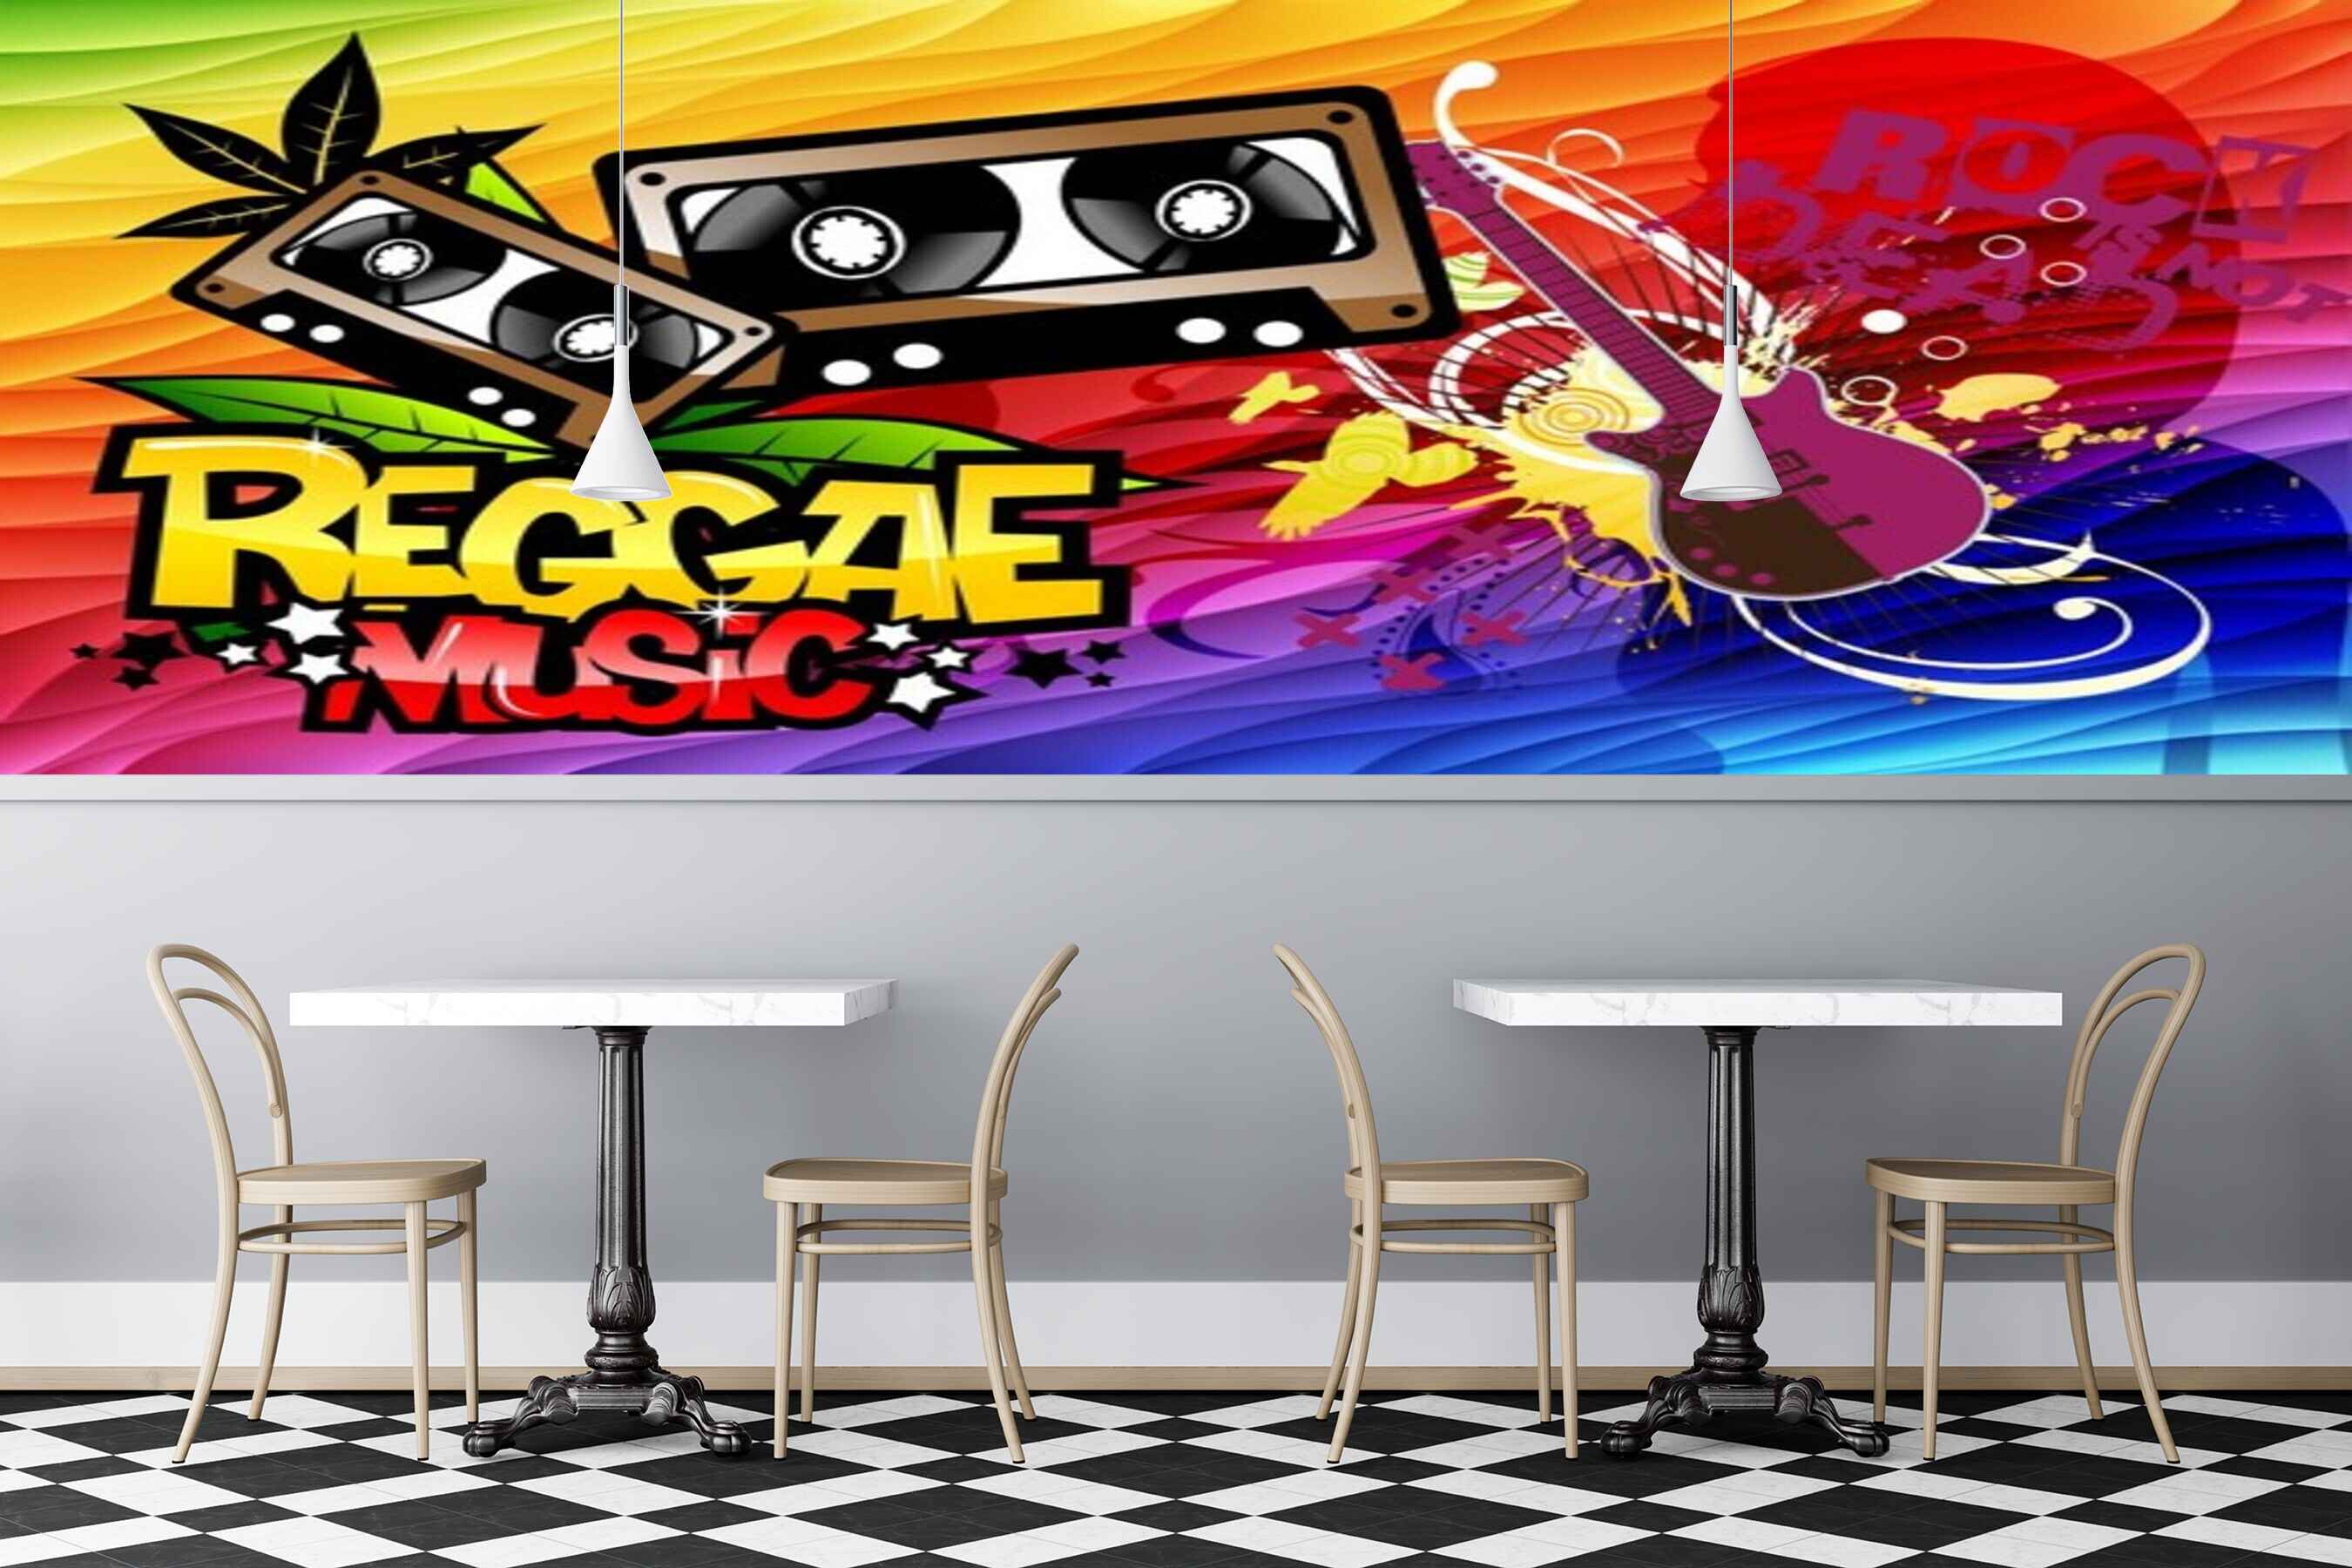 Avikalp MWZ3542 Reggage Music Guitar Tape Recorder HD Wallpaper for Disco Club Karaoke